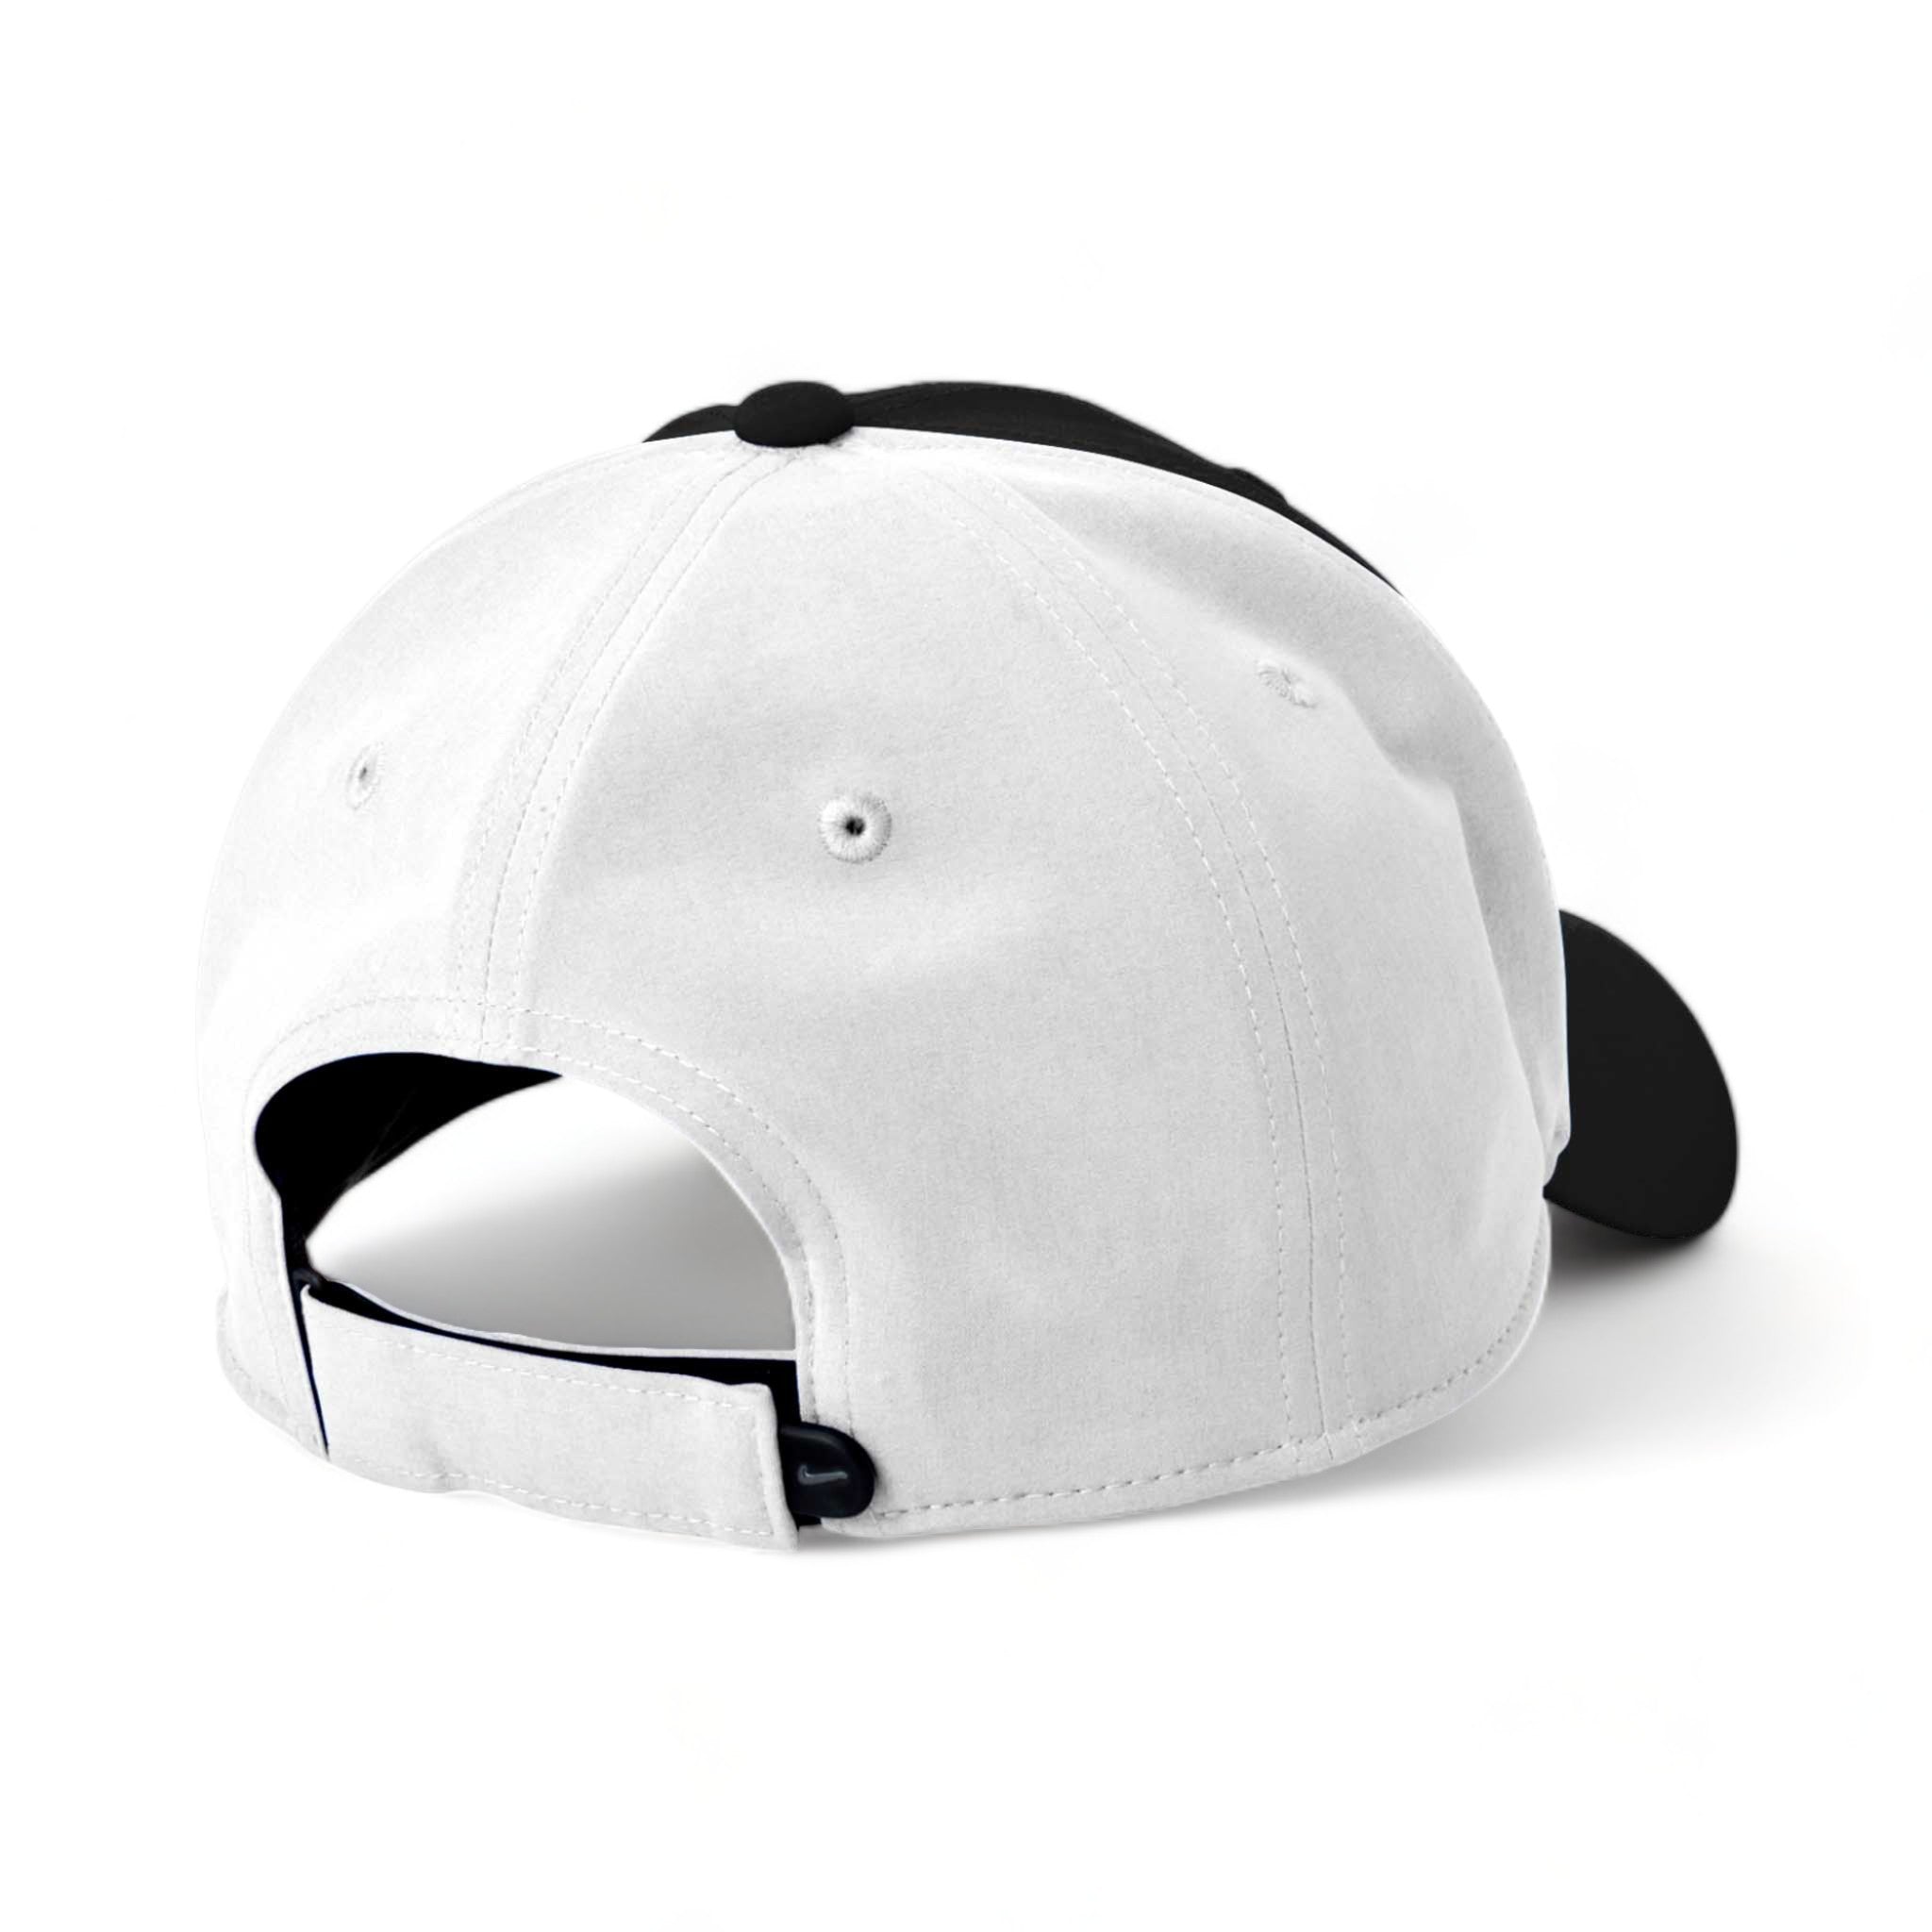 Back view of Nike NKFB6447 custom hat in black and white